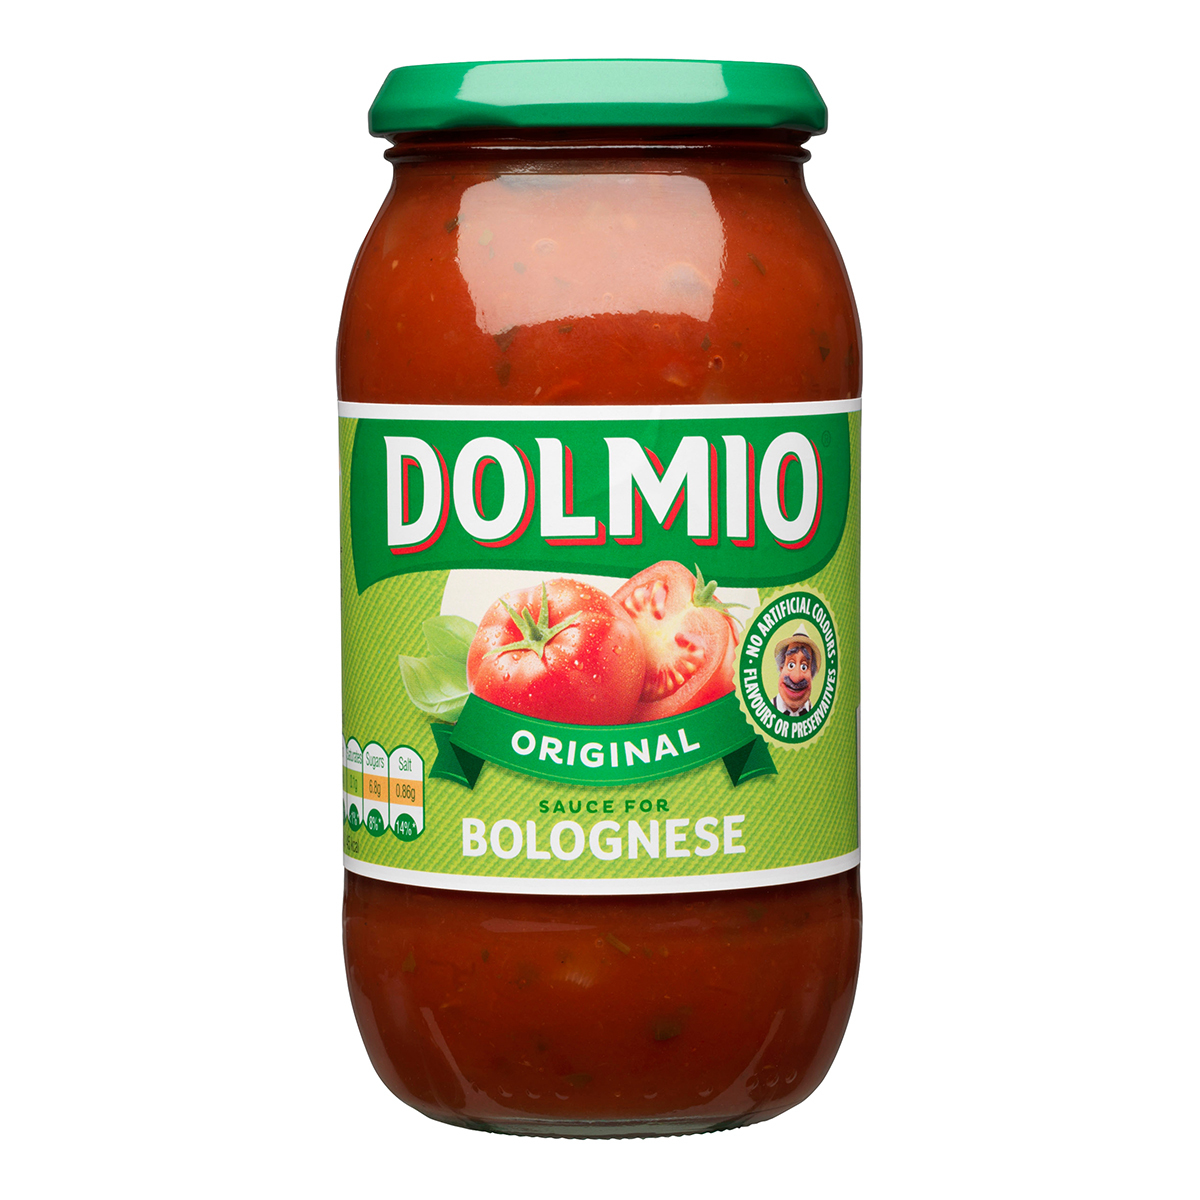 Dolmio Original Bolognese Sauce, 6 x 500g